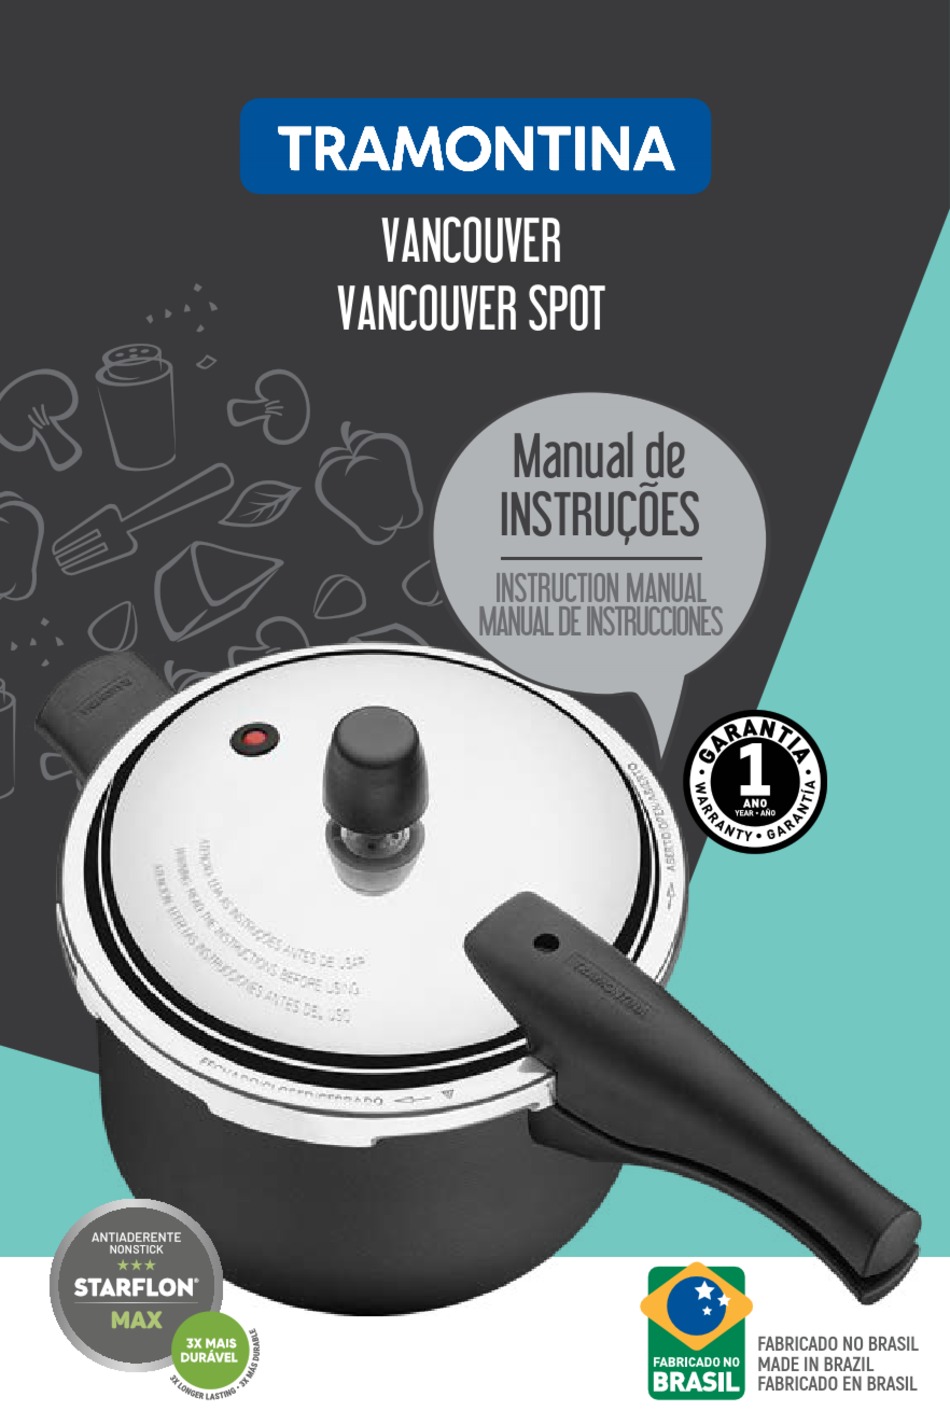 TRAMONTINA VANCOUVER INSTRUCTION MANUAL Pdf Download | ManualsLib